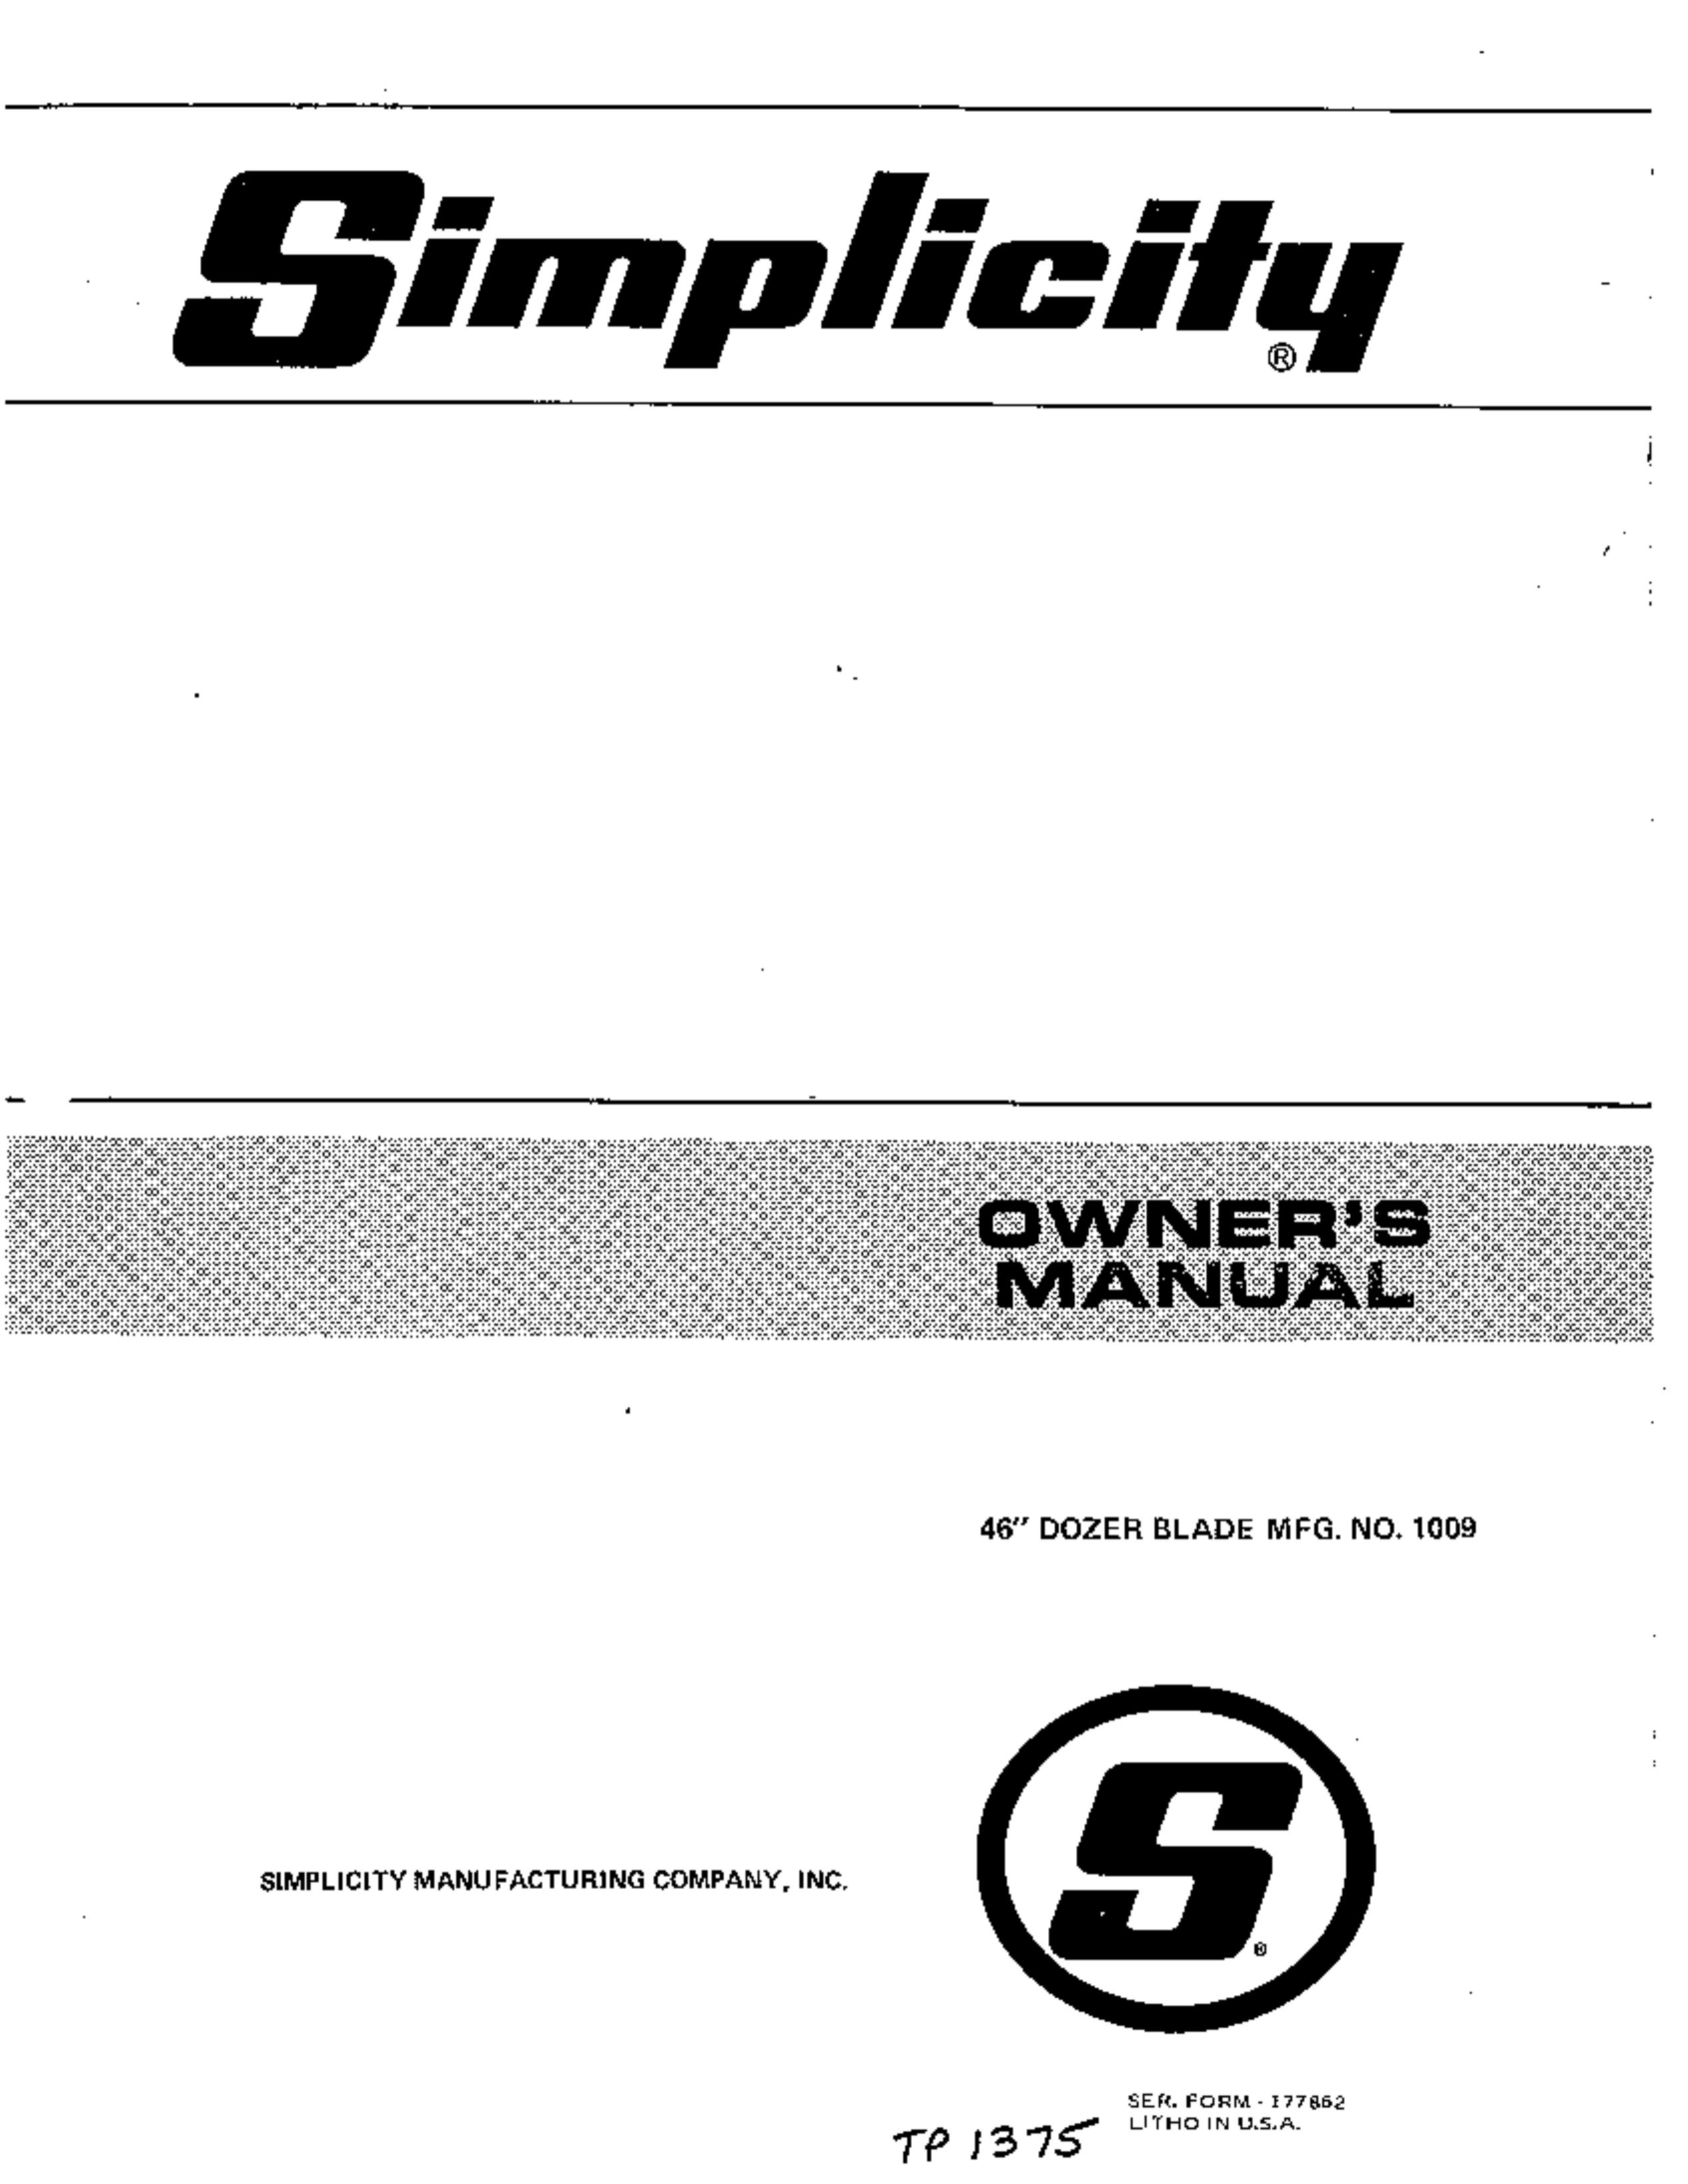 Simplicity 1009 Snow Blower User Manual